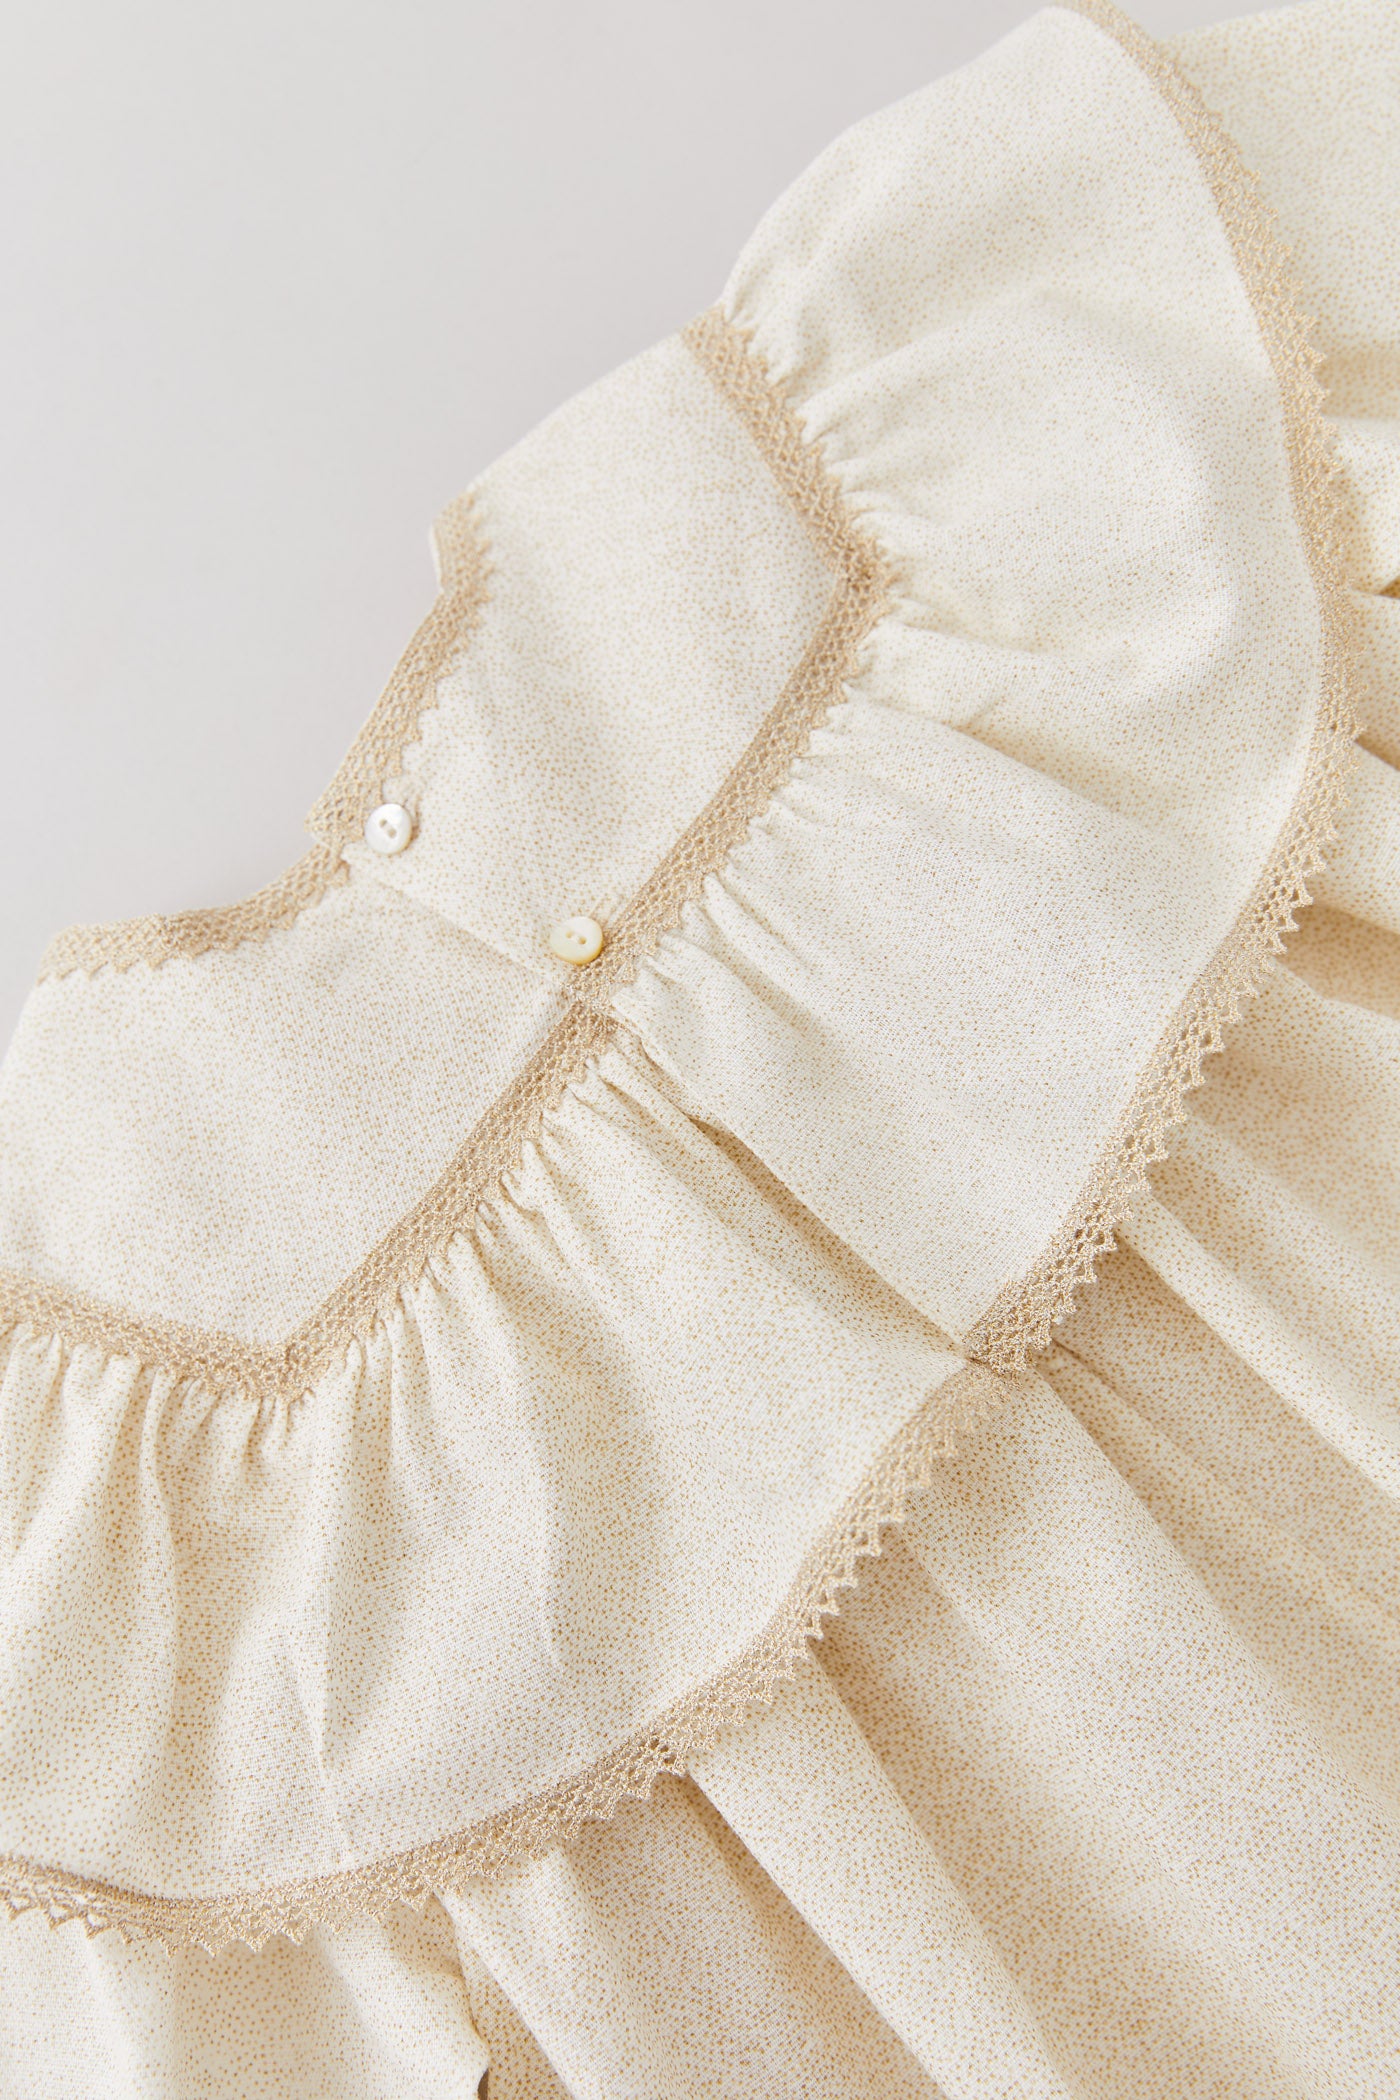 Salt Dress in Cream Gold Glitter - Designed by Ingrid Lewis - Strawberries & Cream